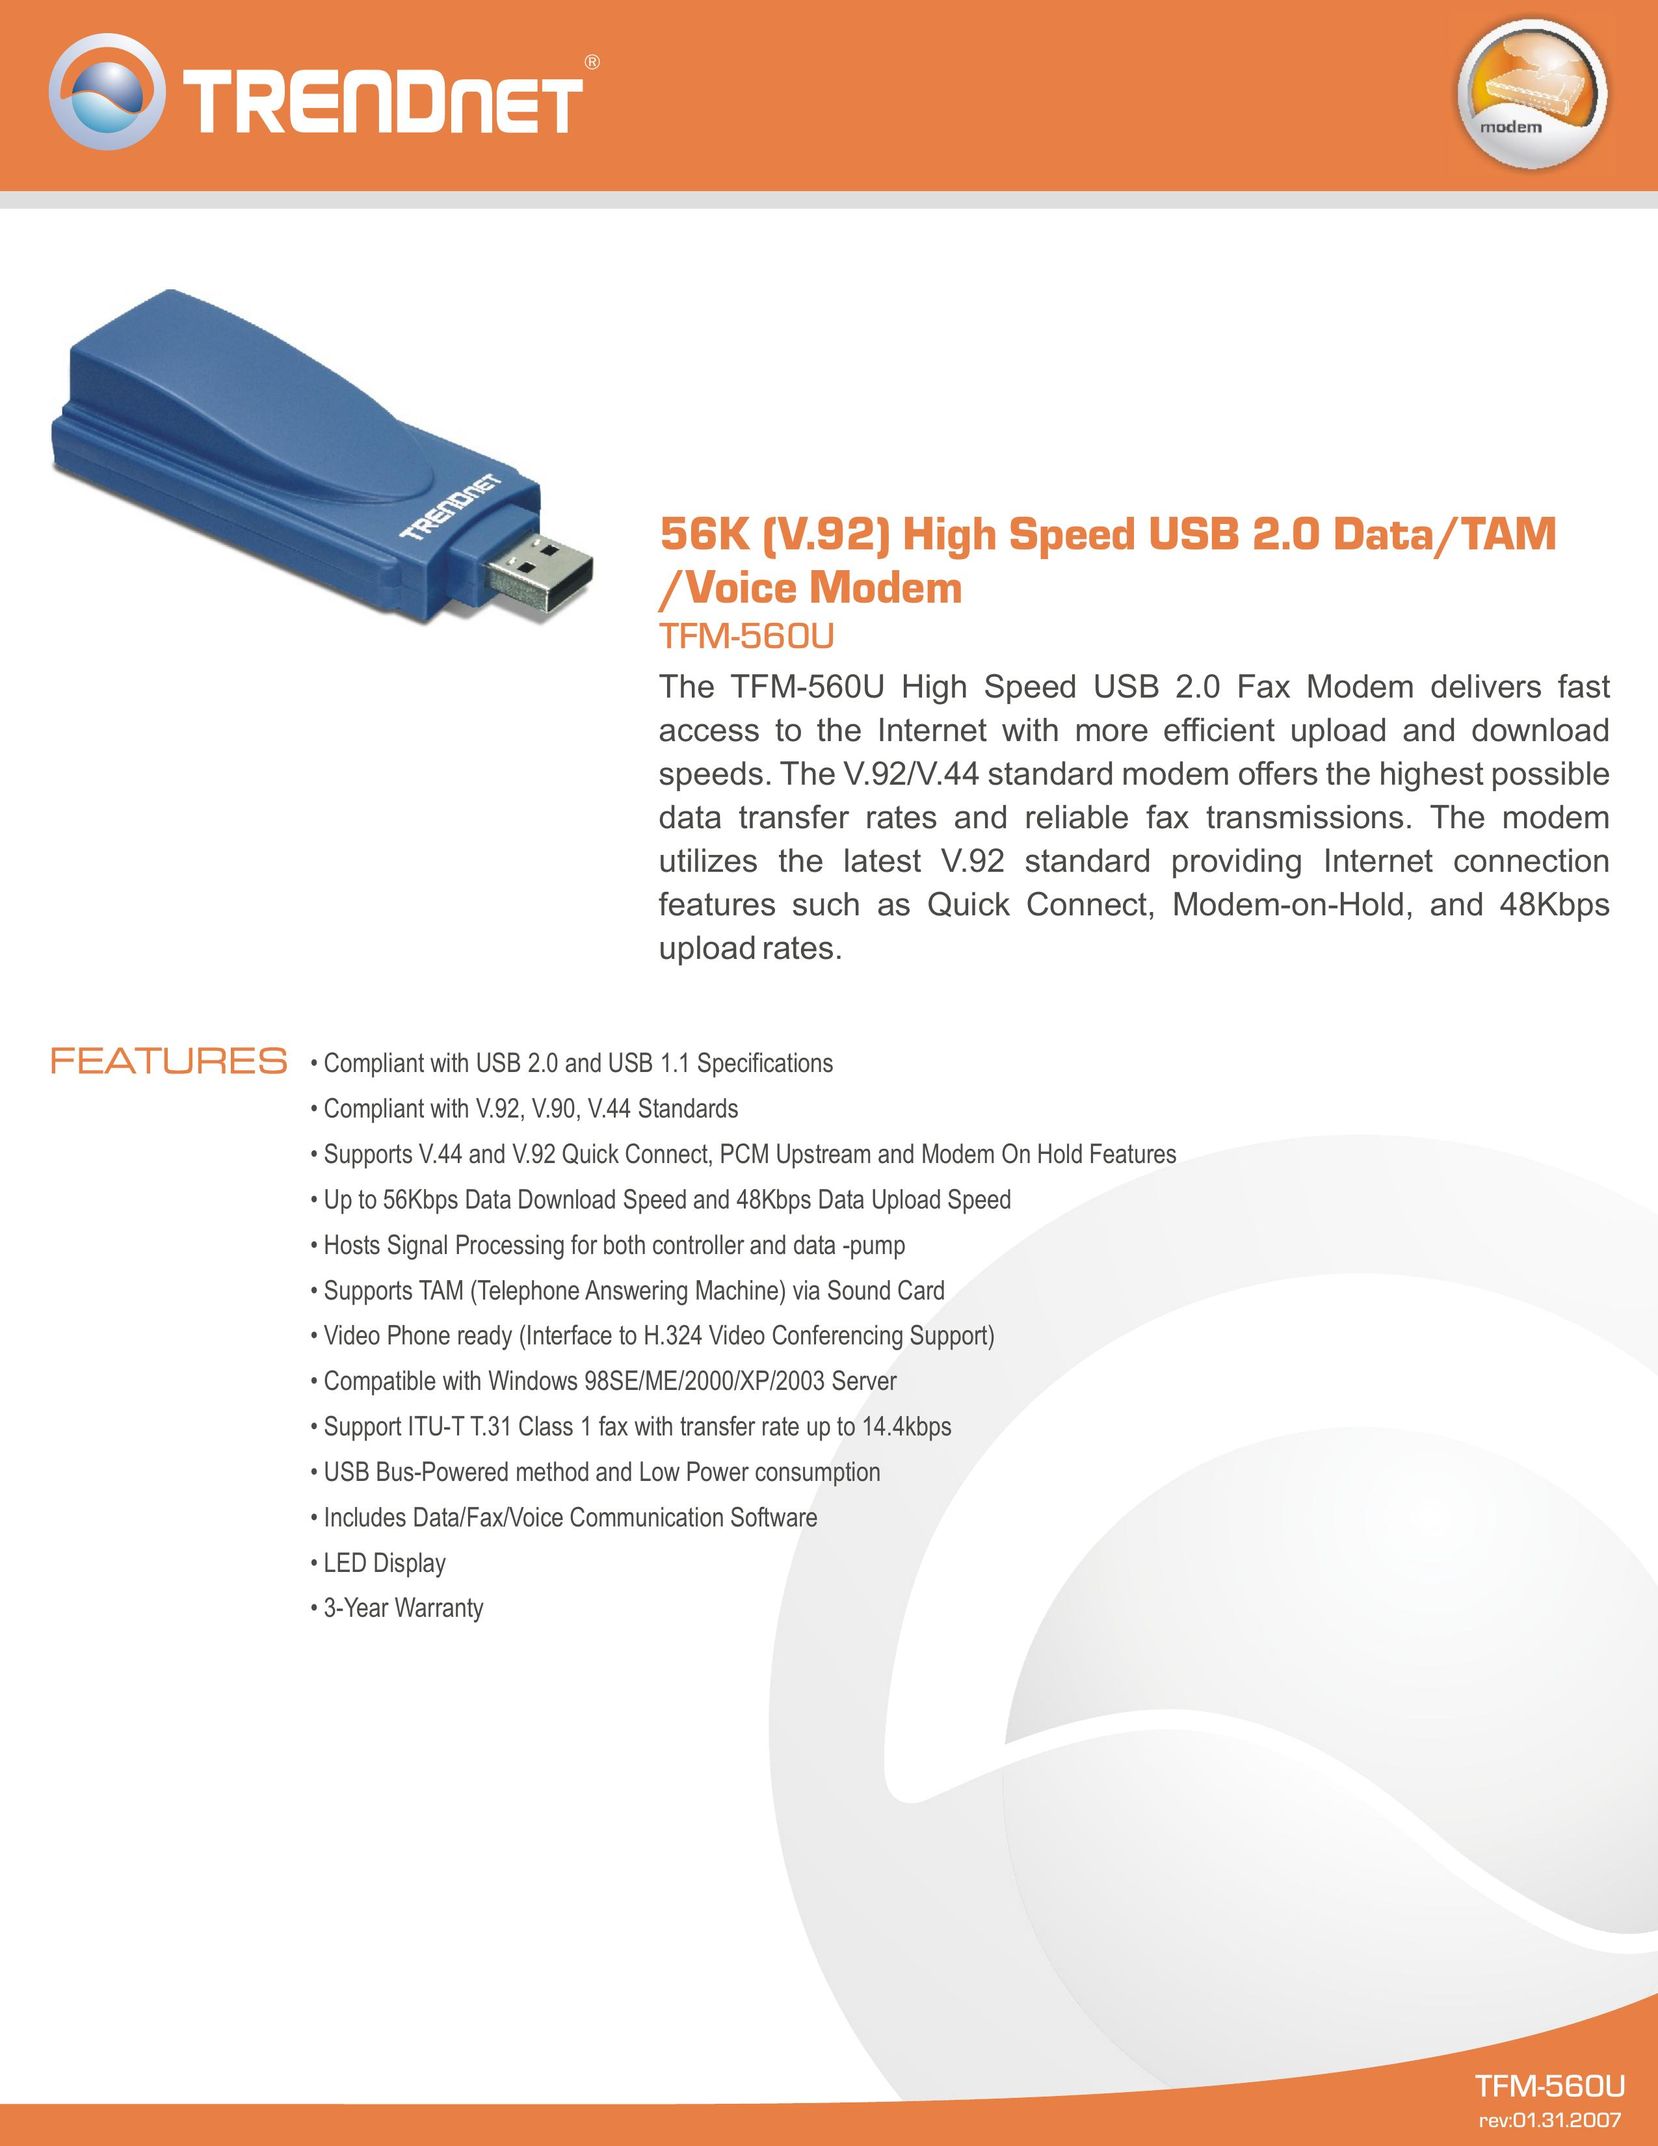 TRENDnet High Spped USB 2.0 Data/TAM/Voice Modem Computer Accessories User Manual